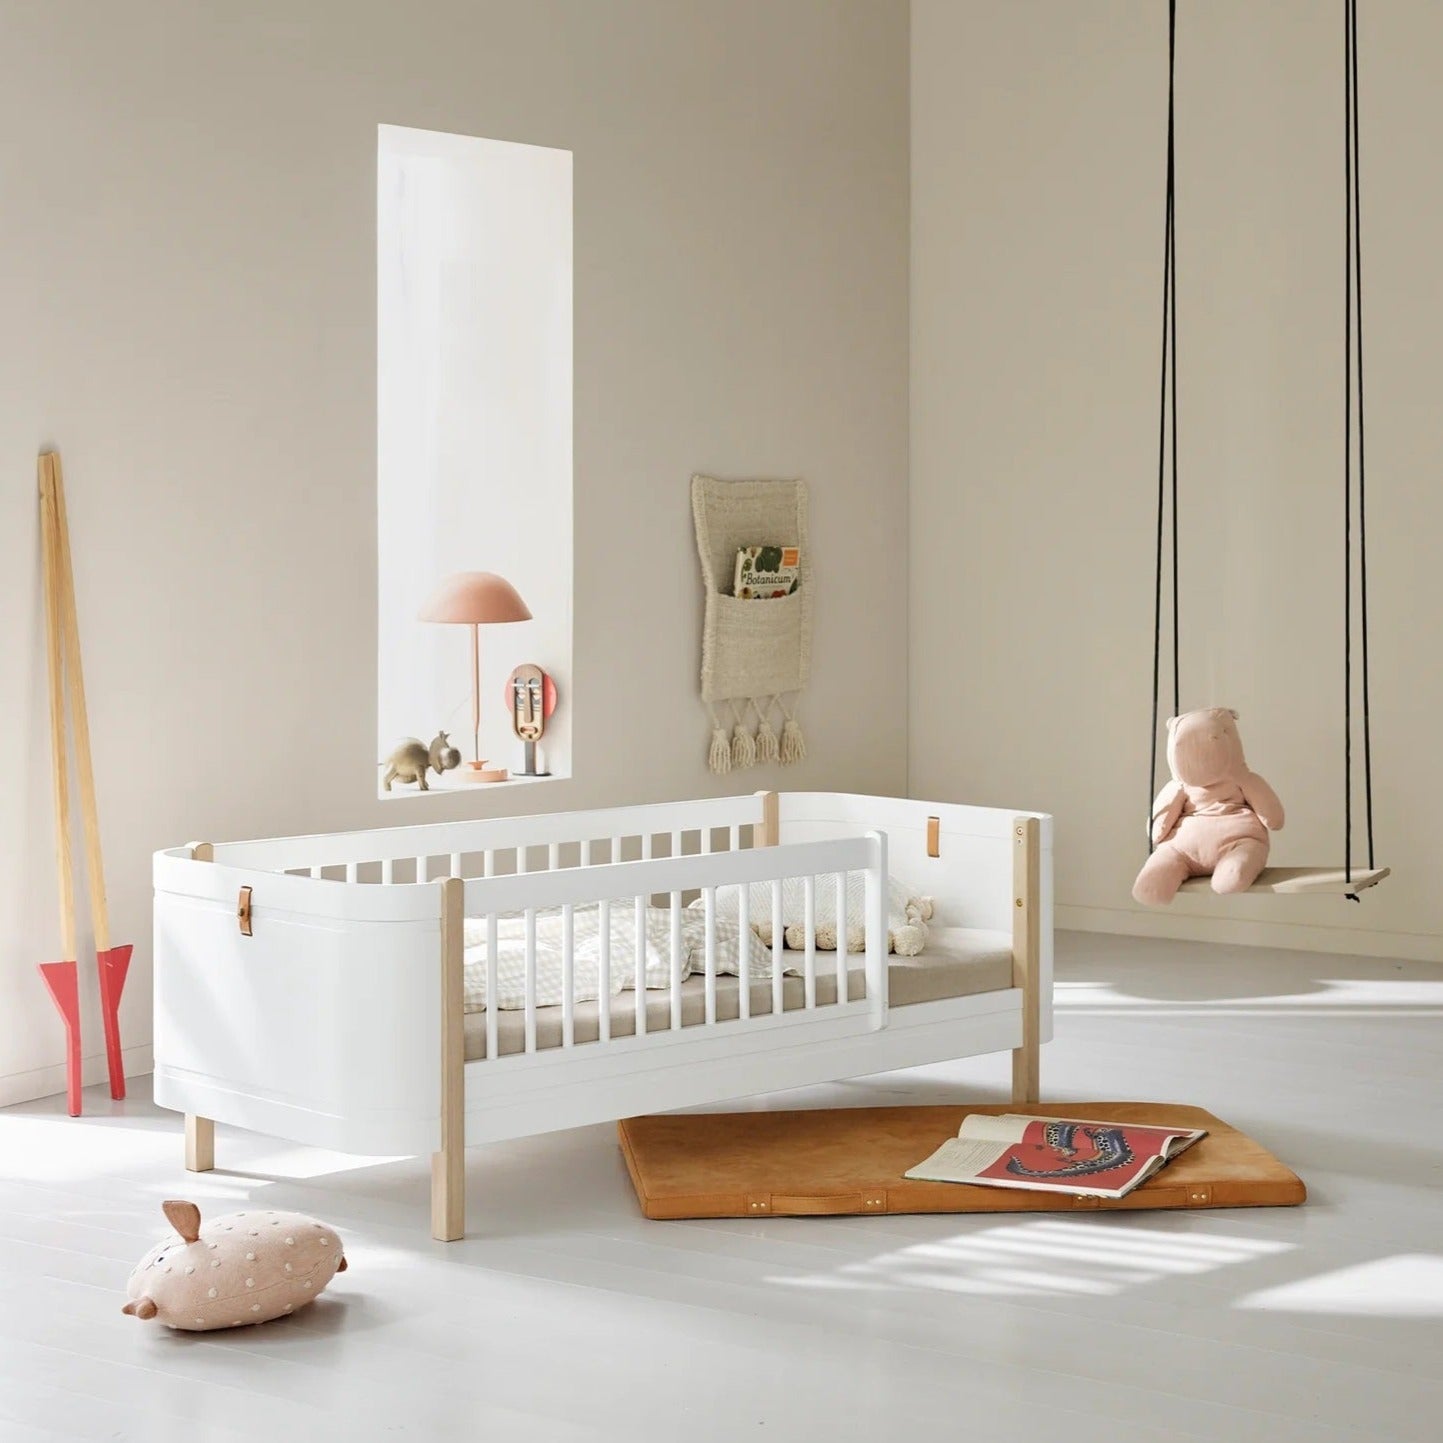 Oliver Furniture Wood Mini+ Junior Bed - White/Oak